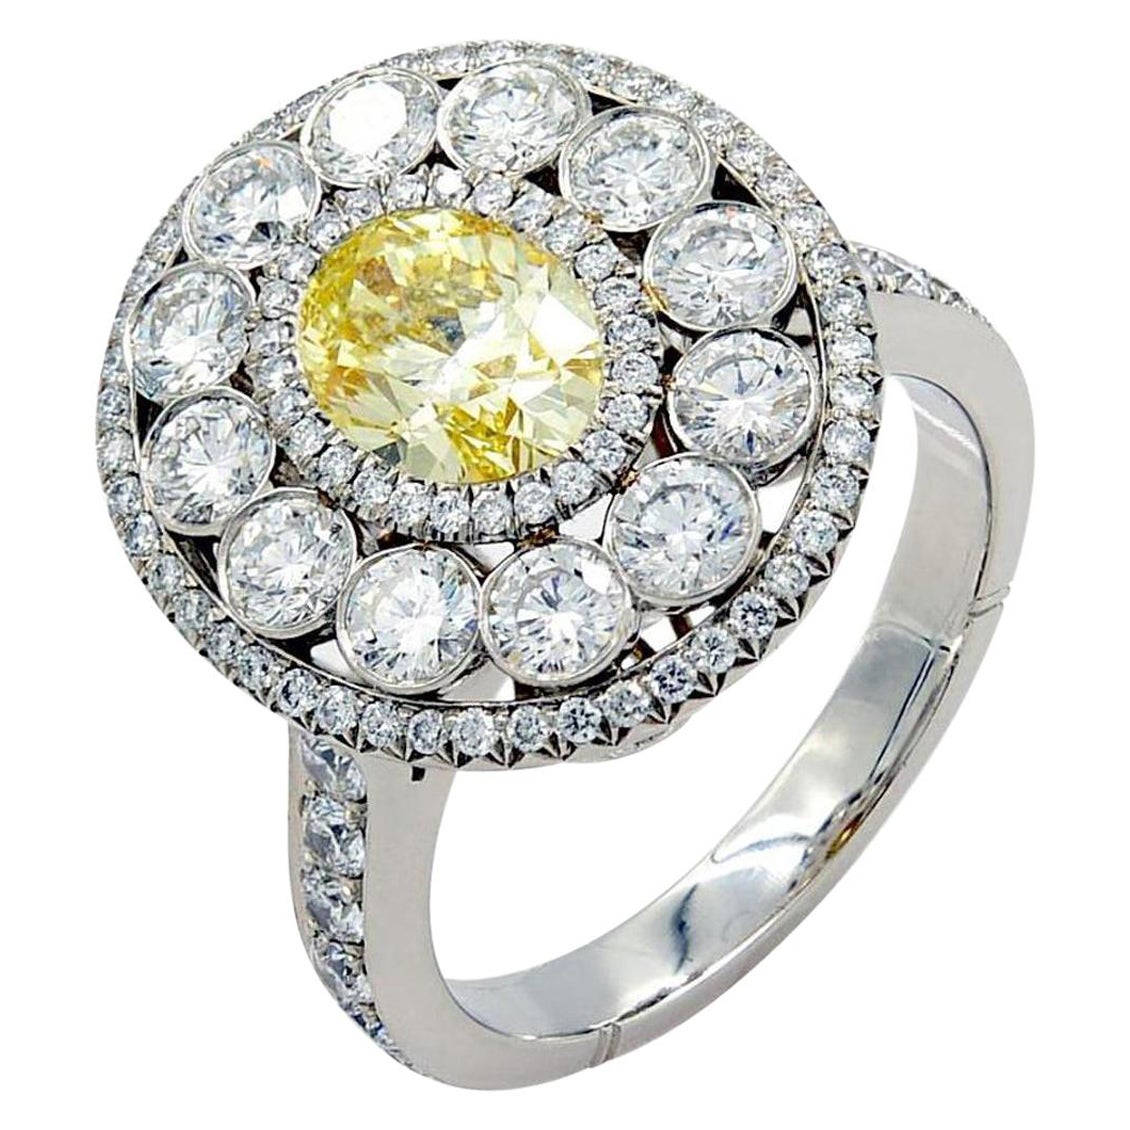 Rachel Koen Verlobungsring aus Platin mit gelbem 1,02 Karat ovalen Diamanten